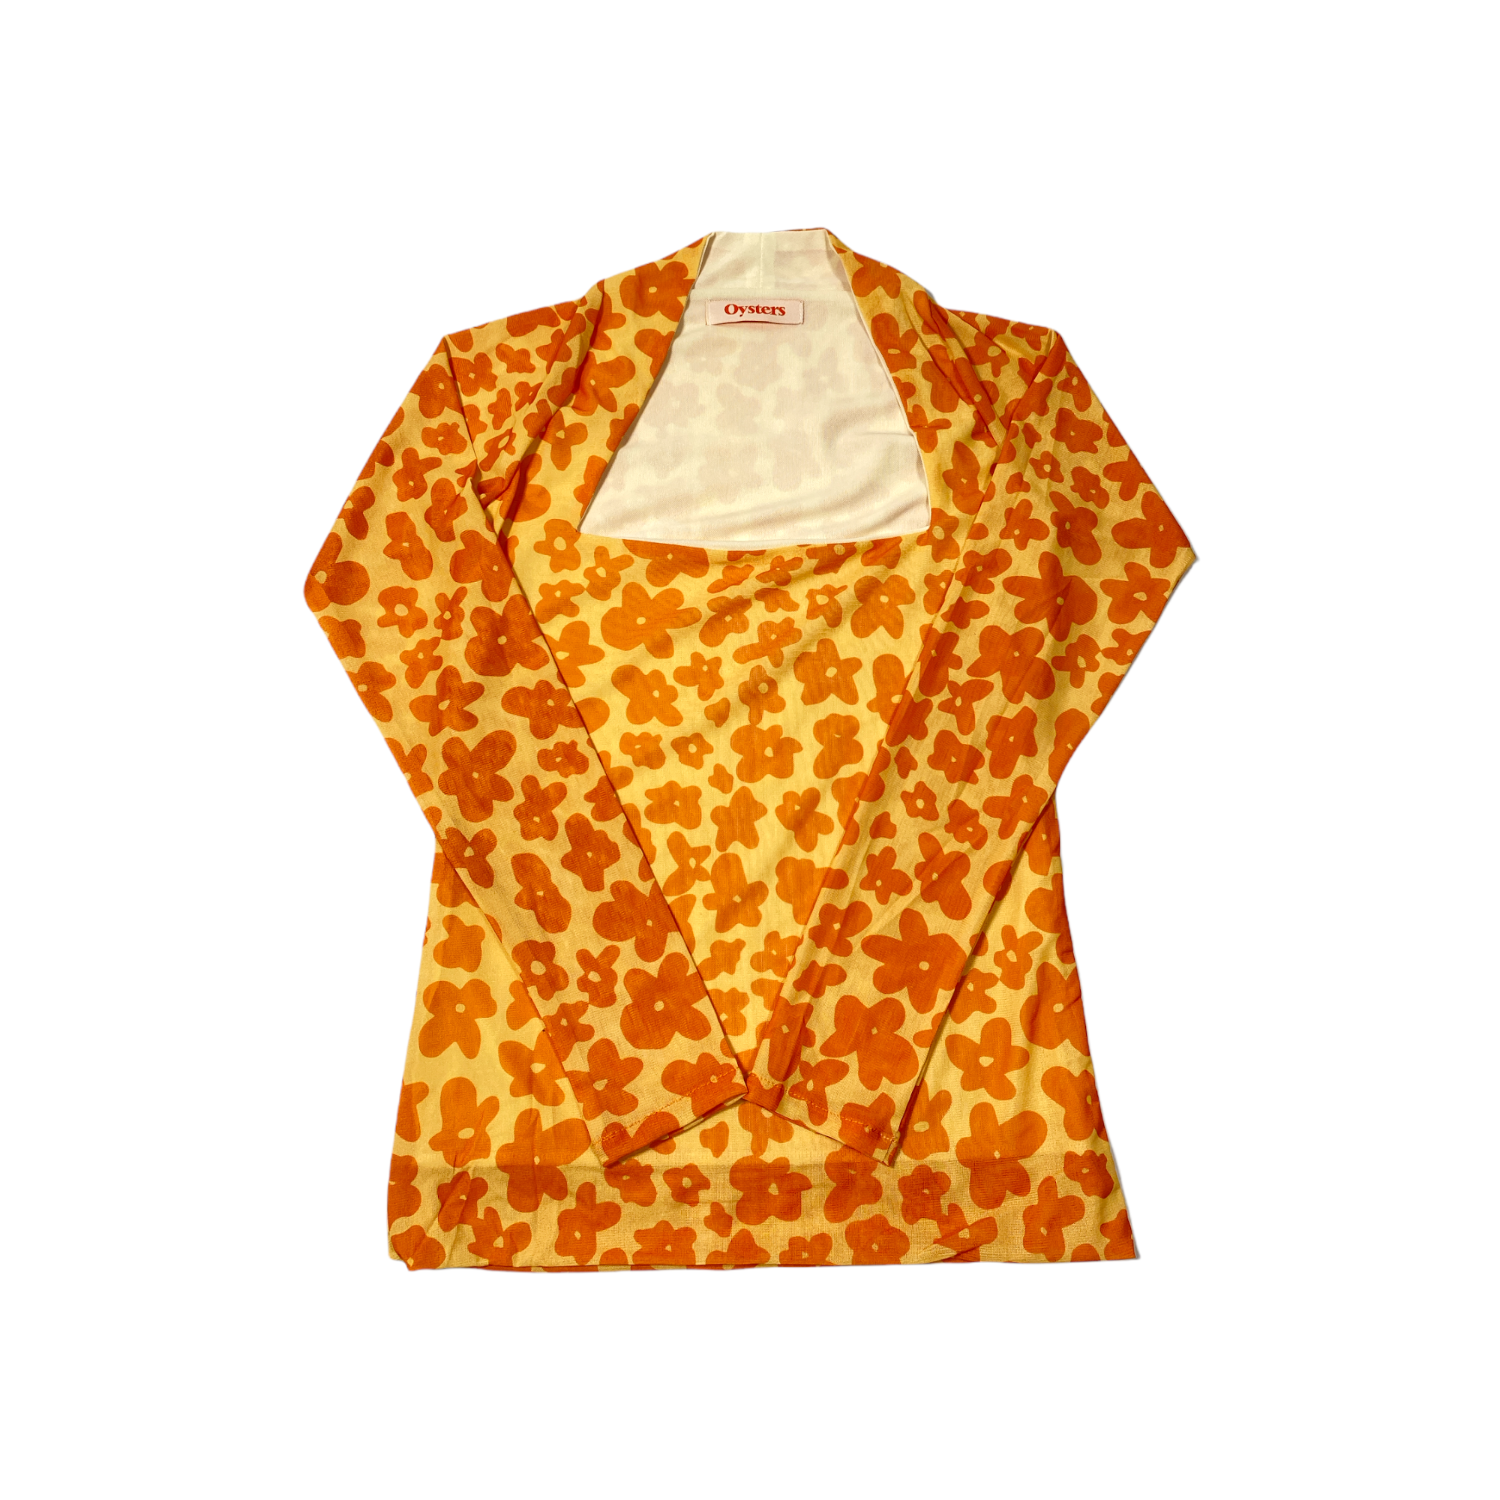 Square - neck floral Top (Orange)